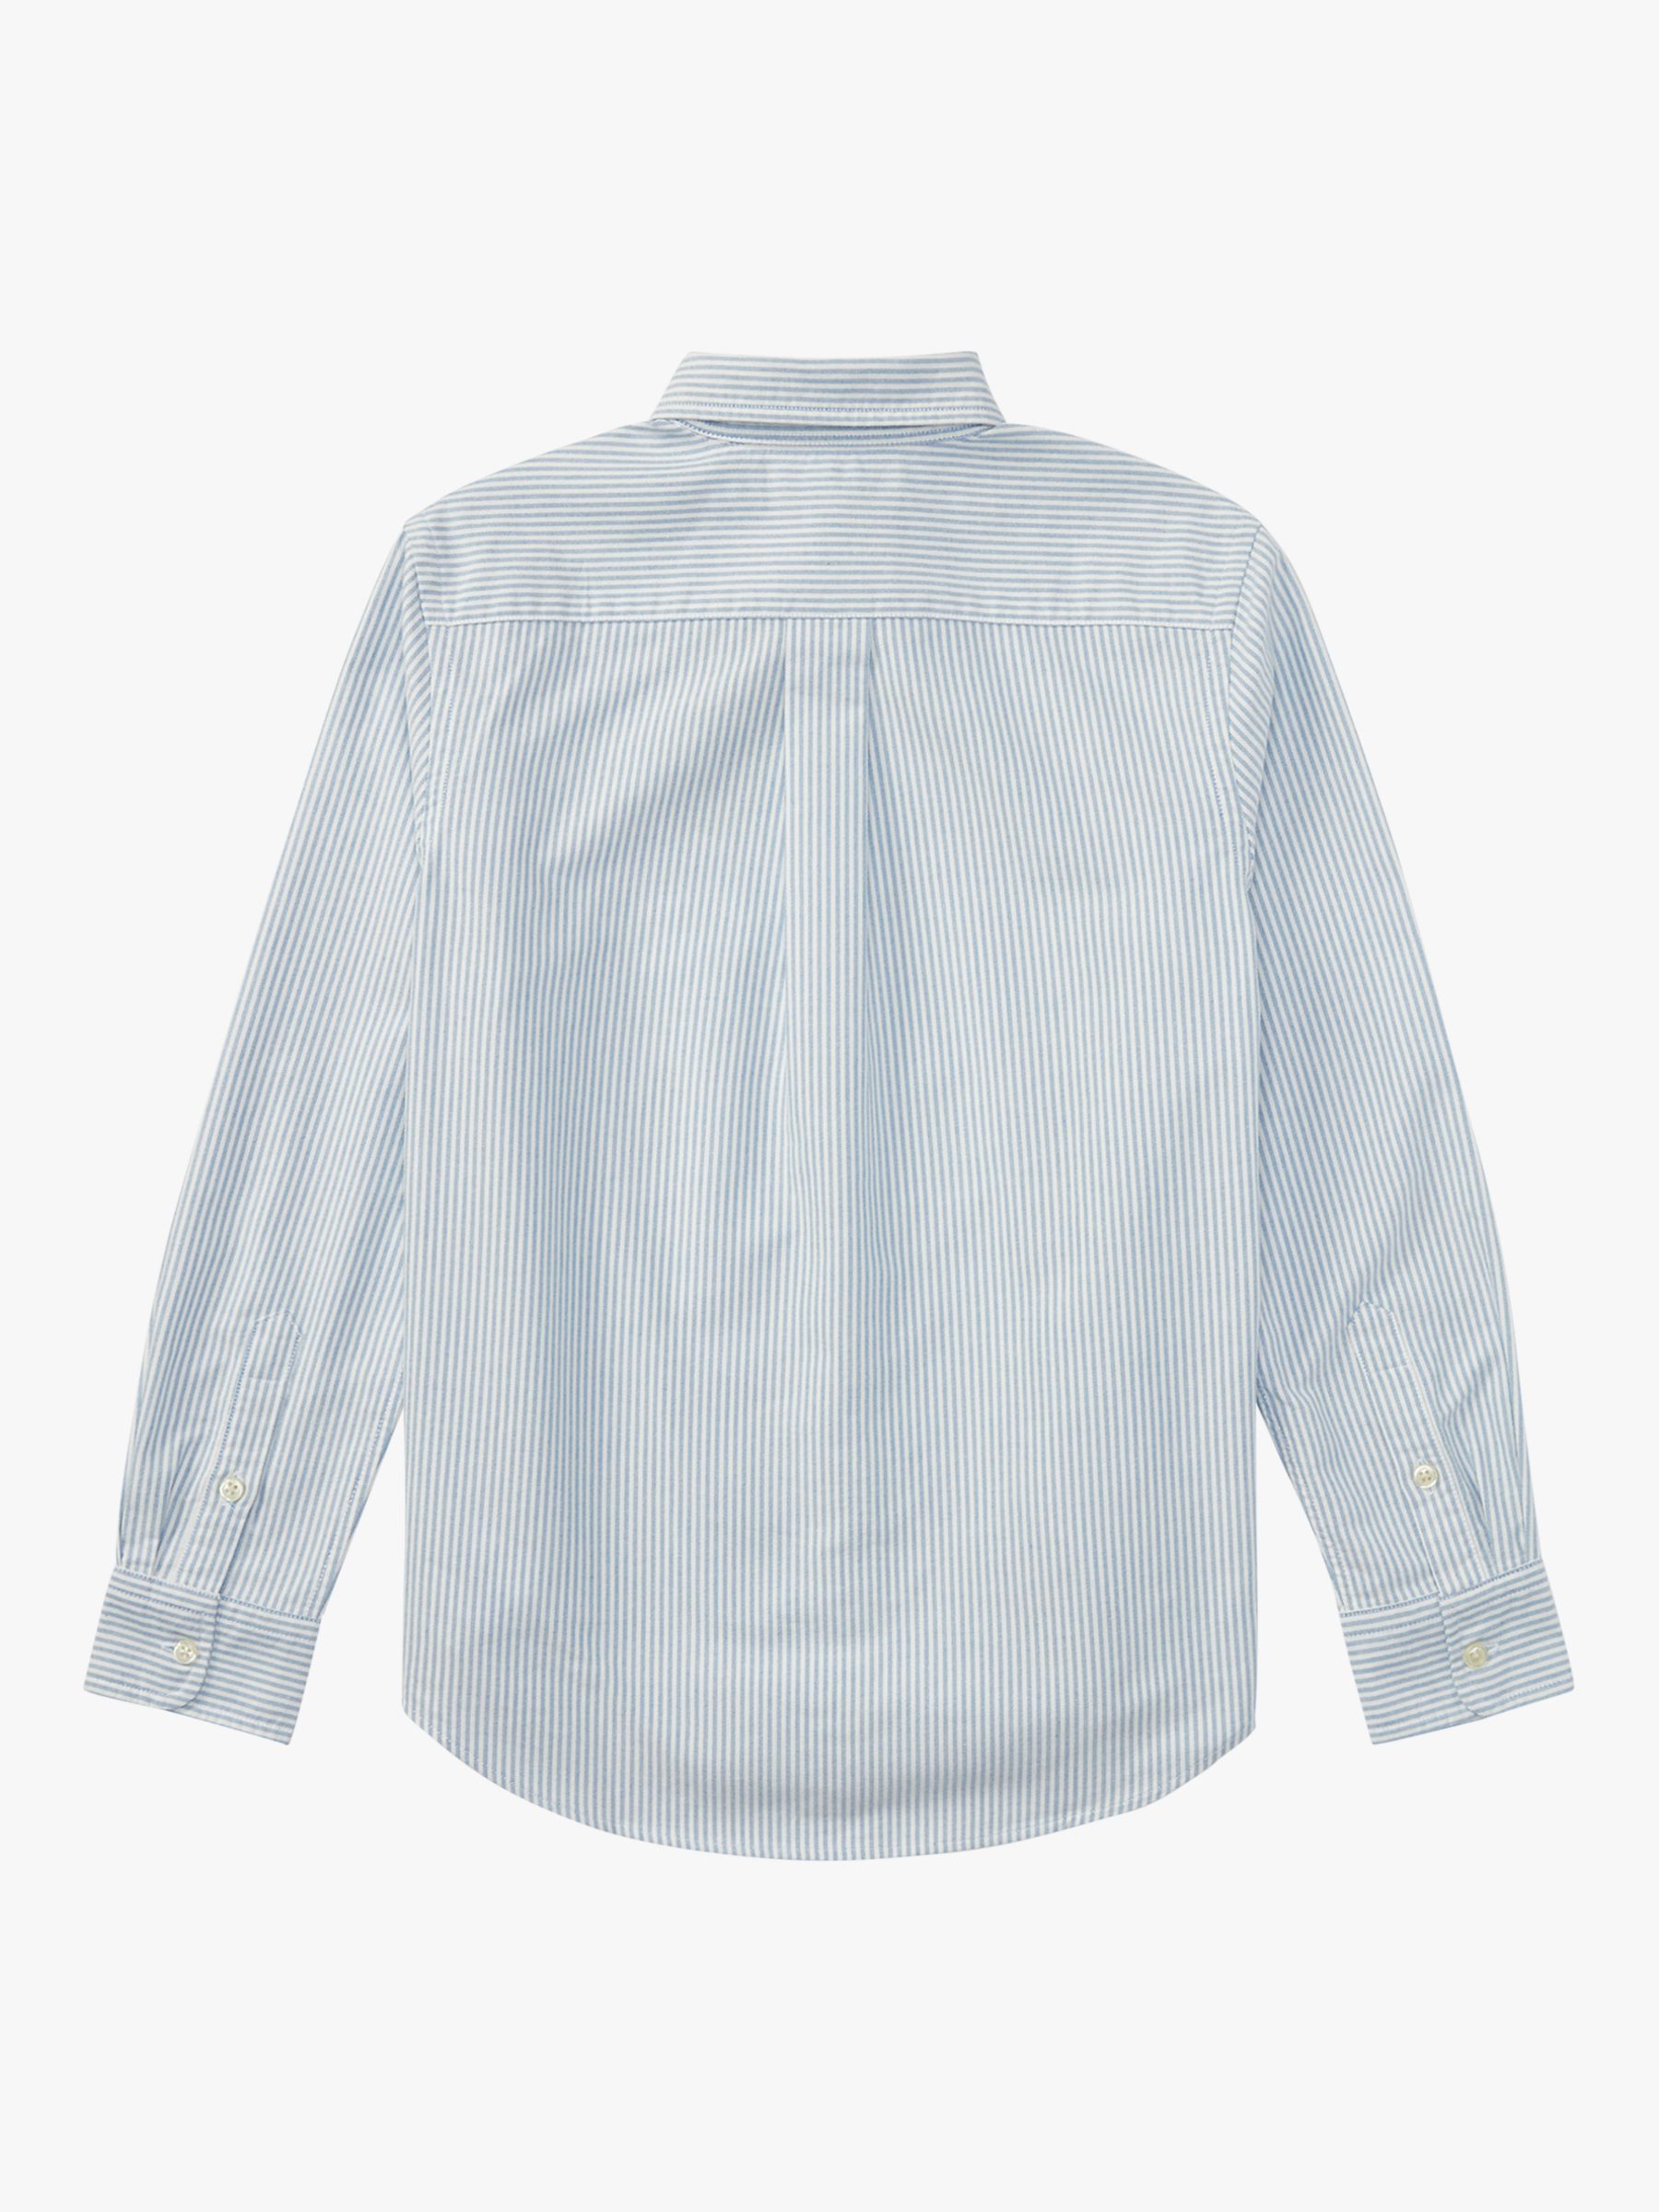 Polo Ralph Lauren Kids' Pinstripe Oxford Shirt, Blue, 5 years